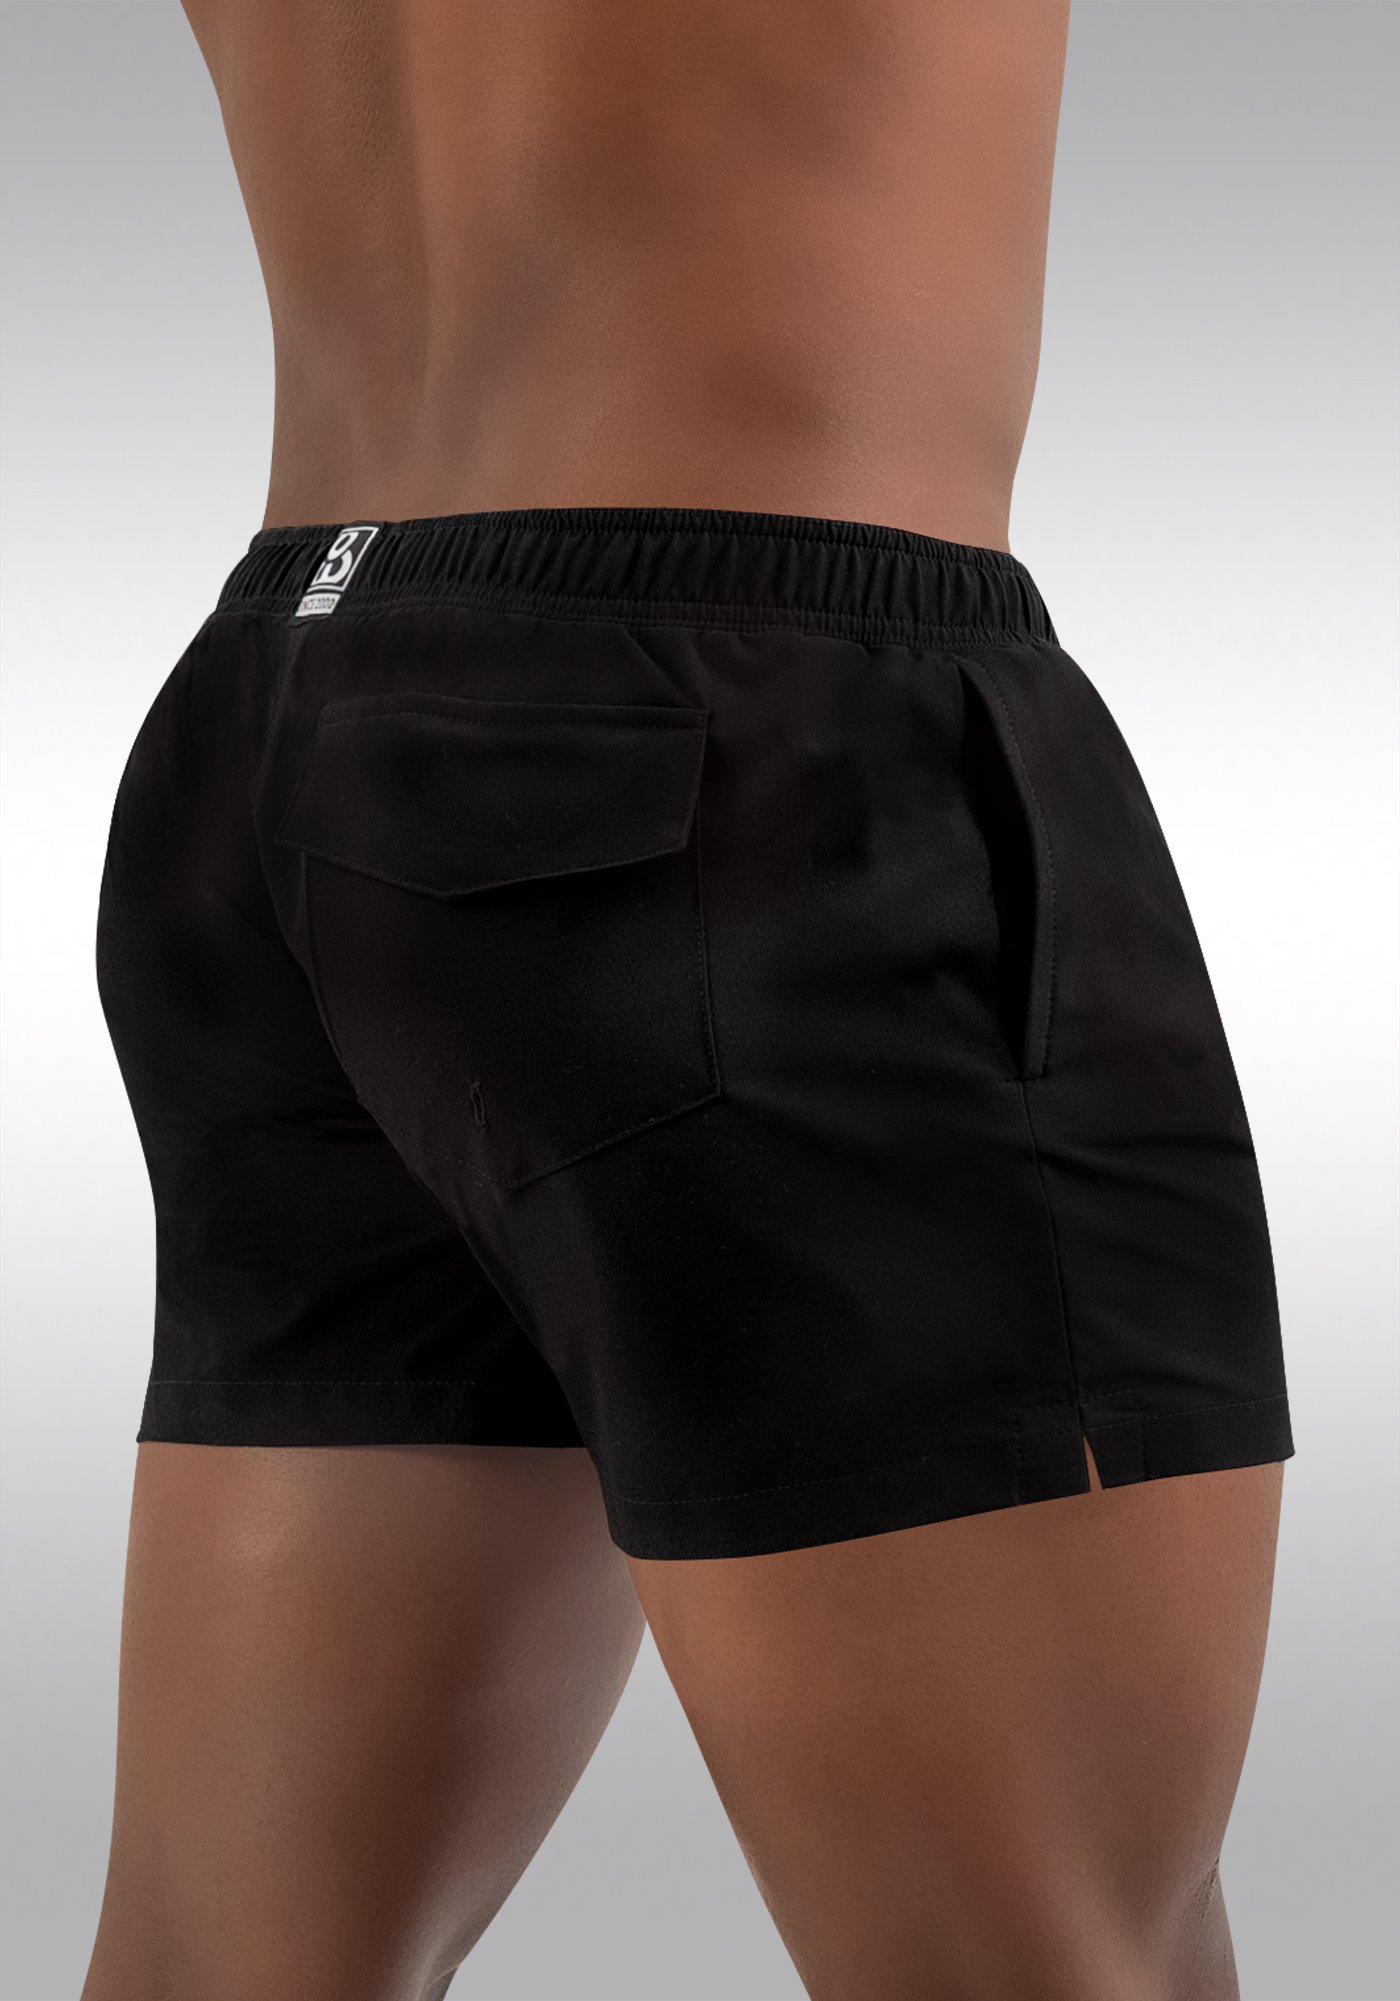 Ergowear GYM & Swim Short with Built-In X4D Thong Black